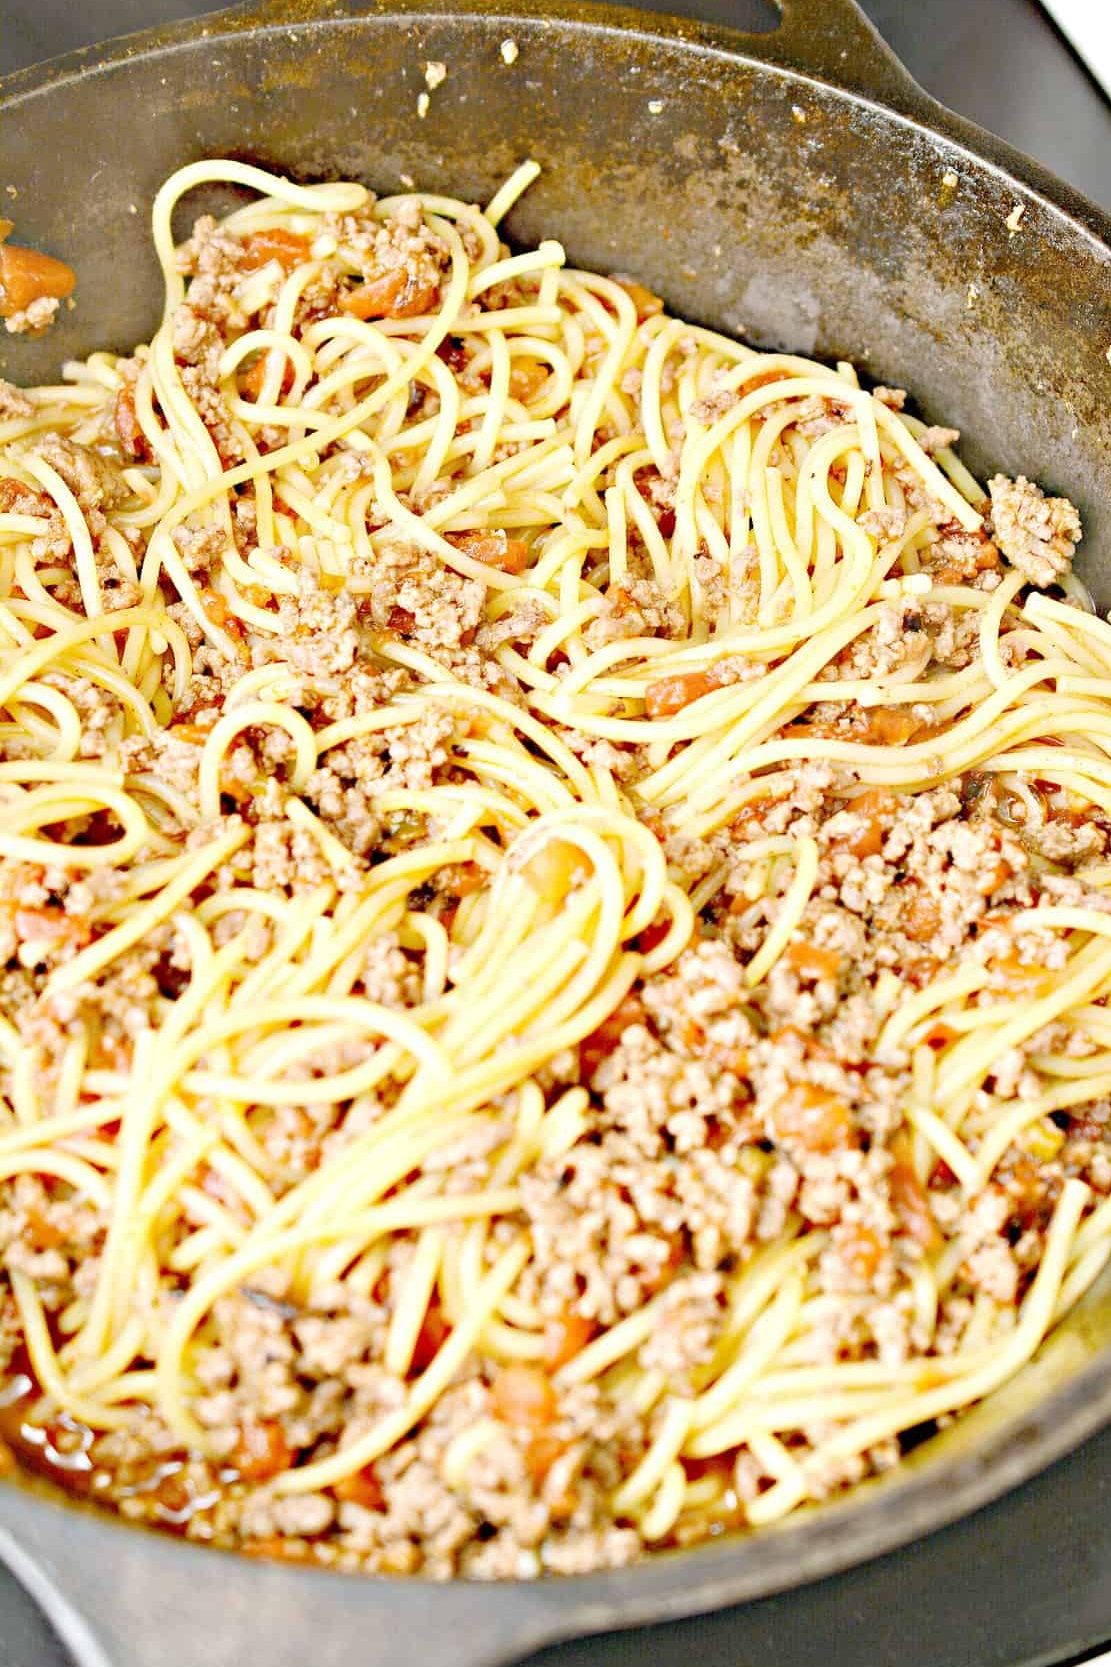 Break the spaghetti in half before adding it as well.